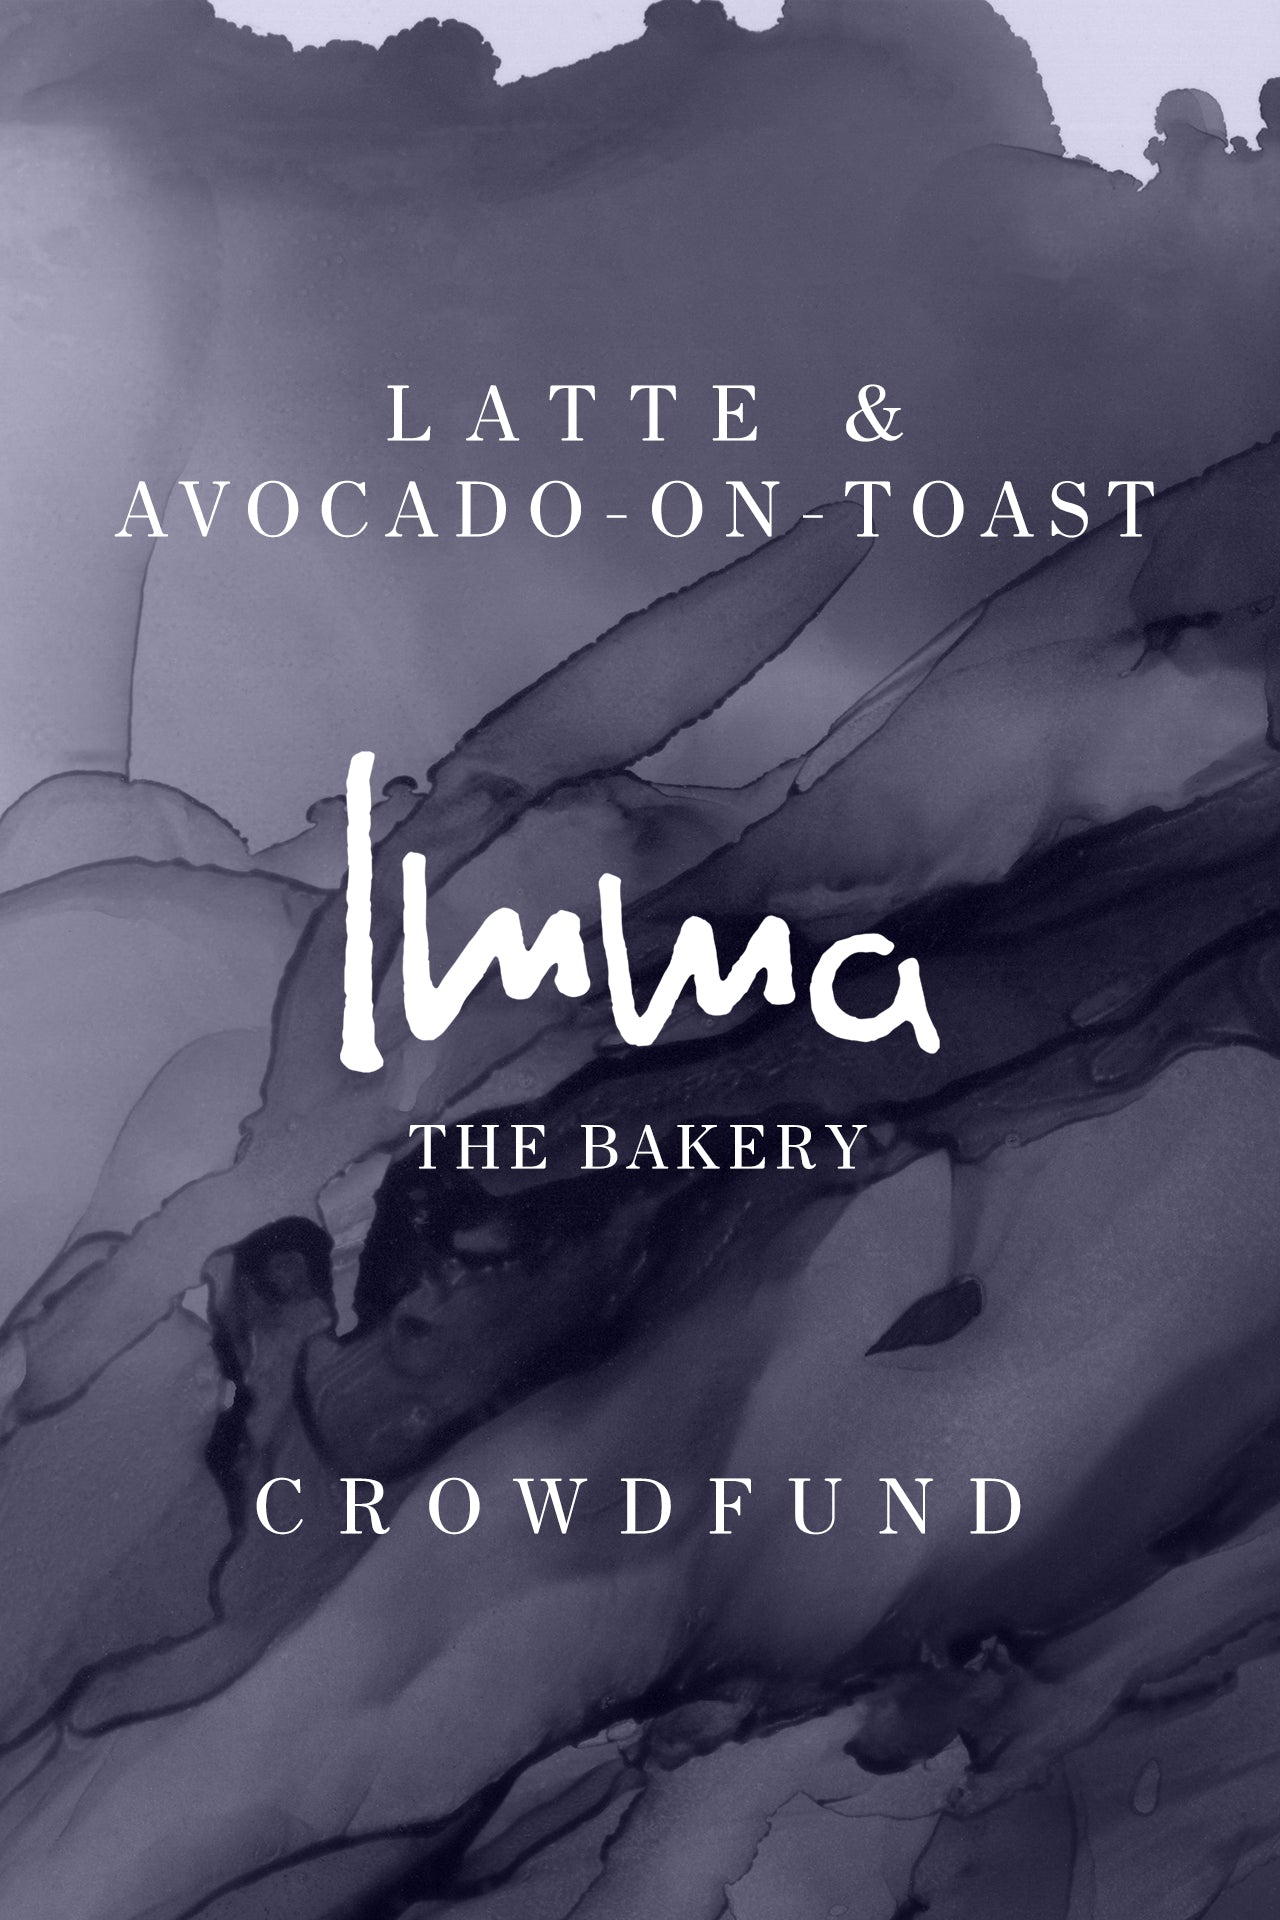 Crowdfund - Latte & Avocado-On-Toast